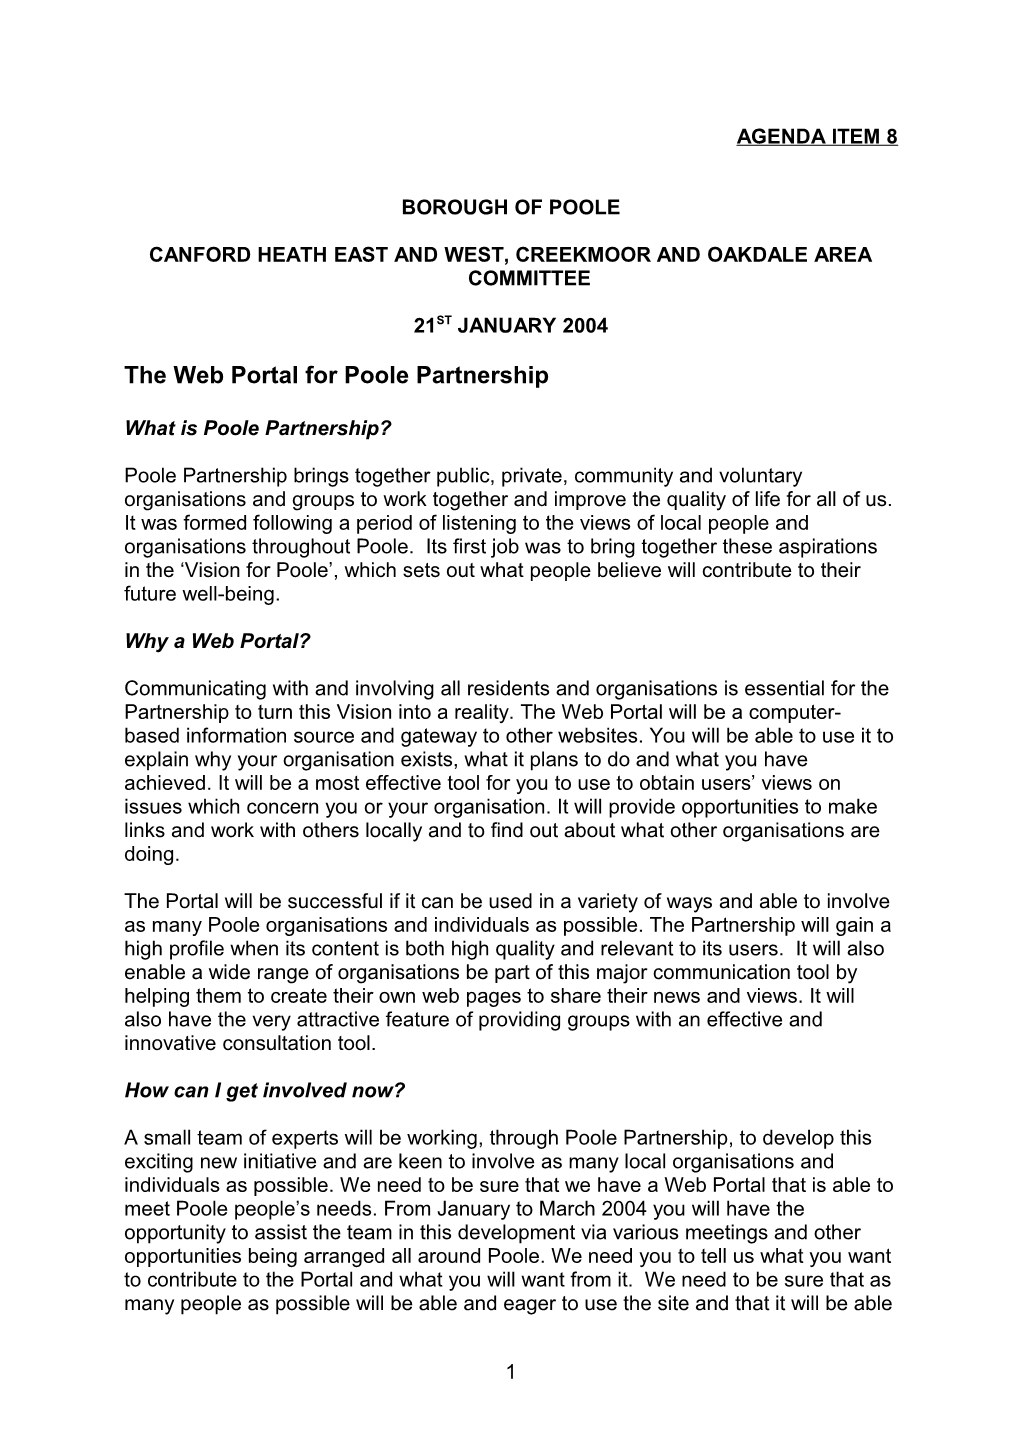 The Web Portal for Poole Partnership